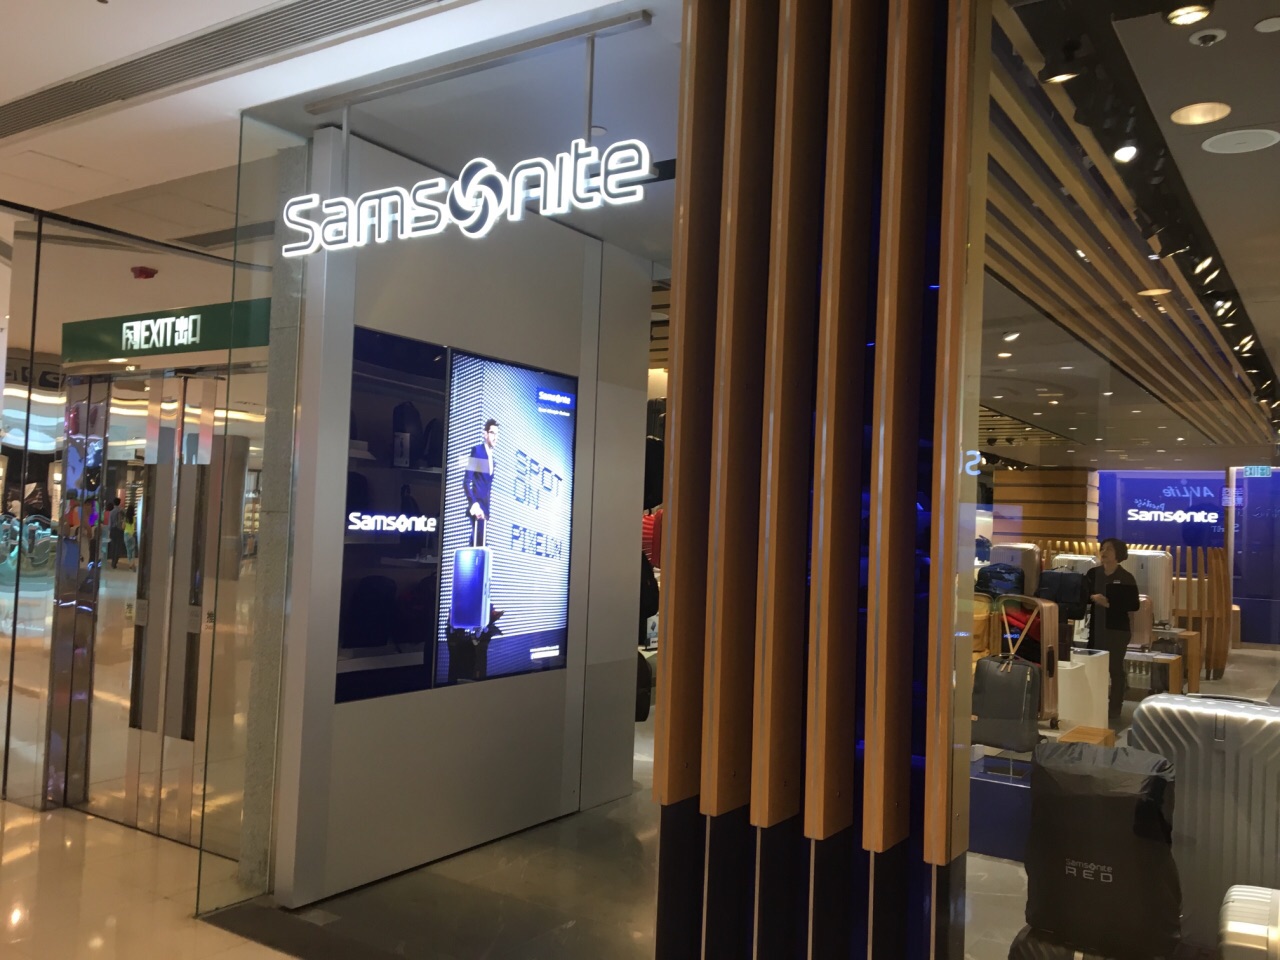 Samsonite(Times Square) - Hong Kong Travel Reviews｜Trip.com Travel Guide